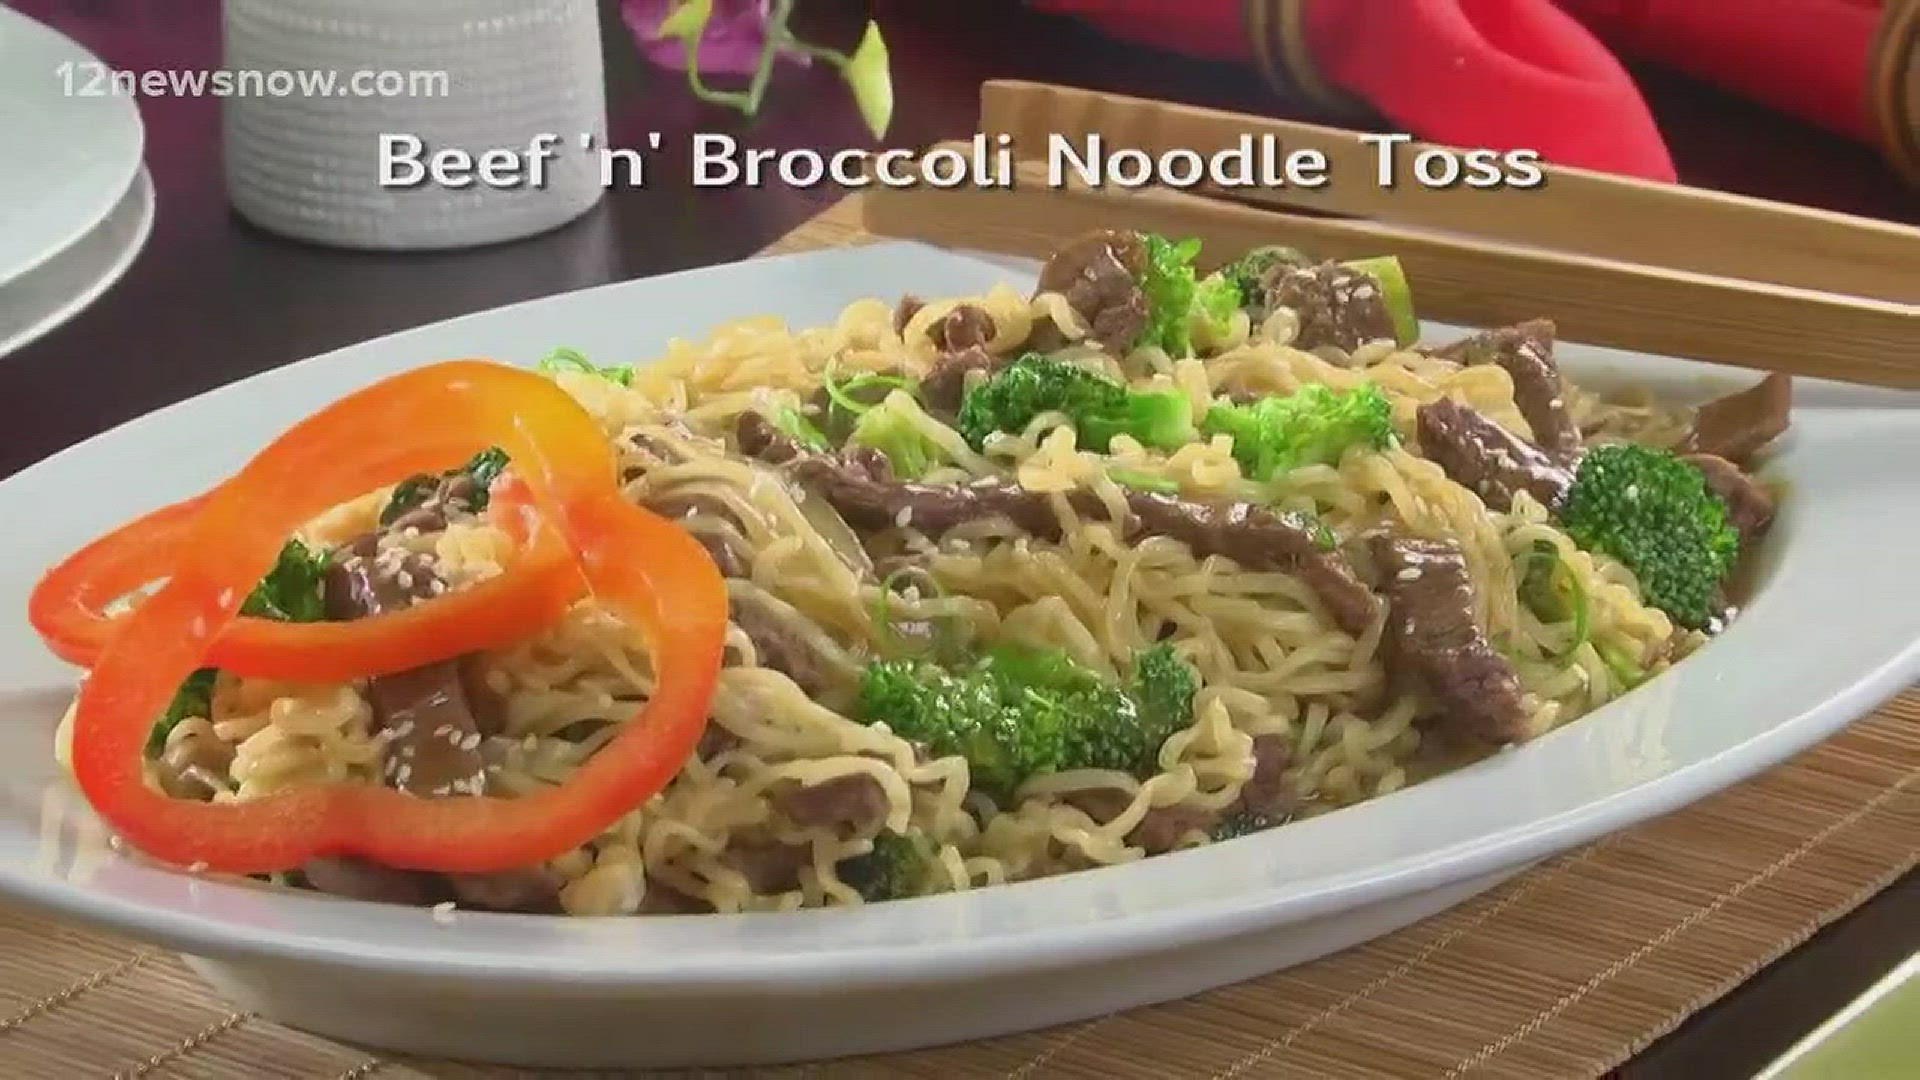 Mr. Food makes 'Beef 'n' Broccoli Noodle Toss'